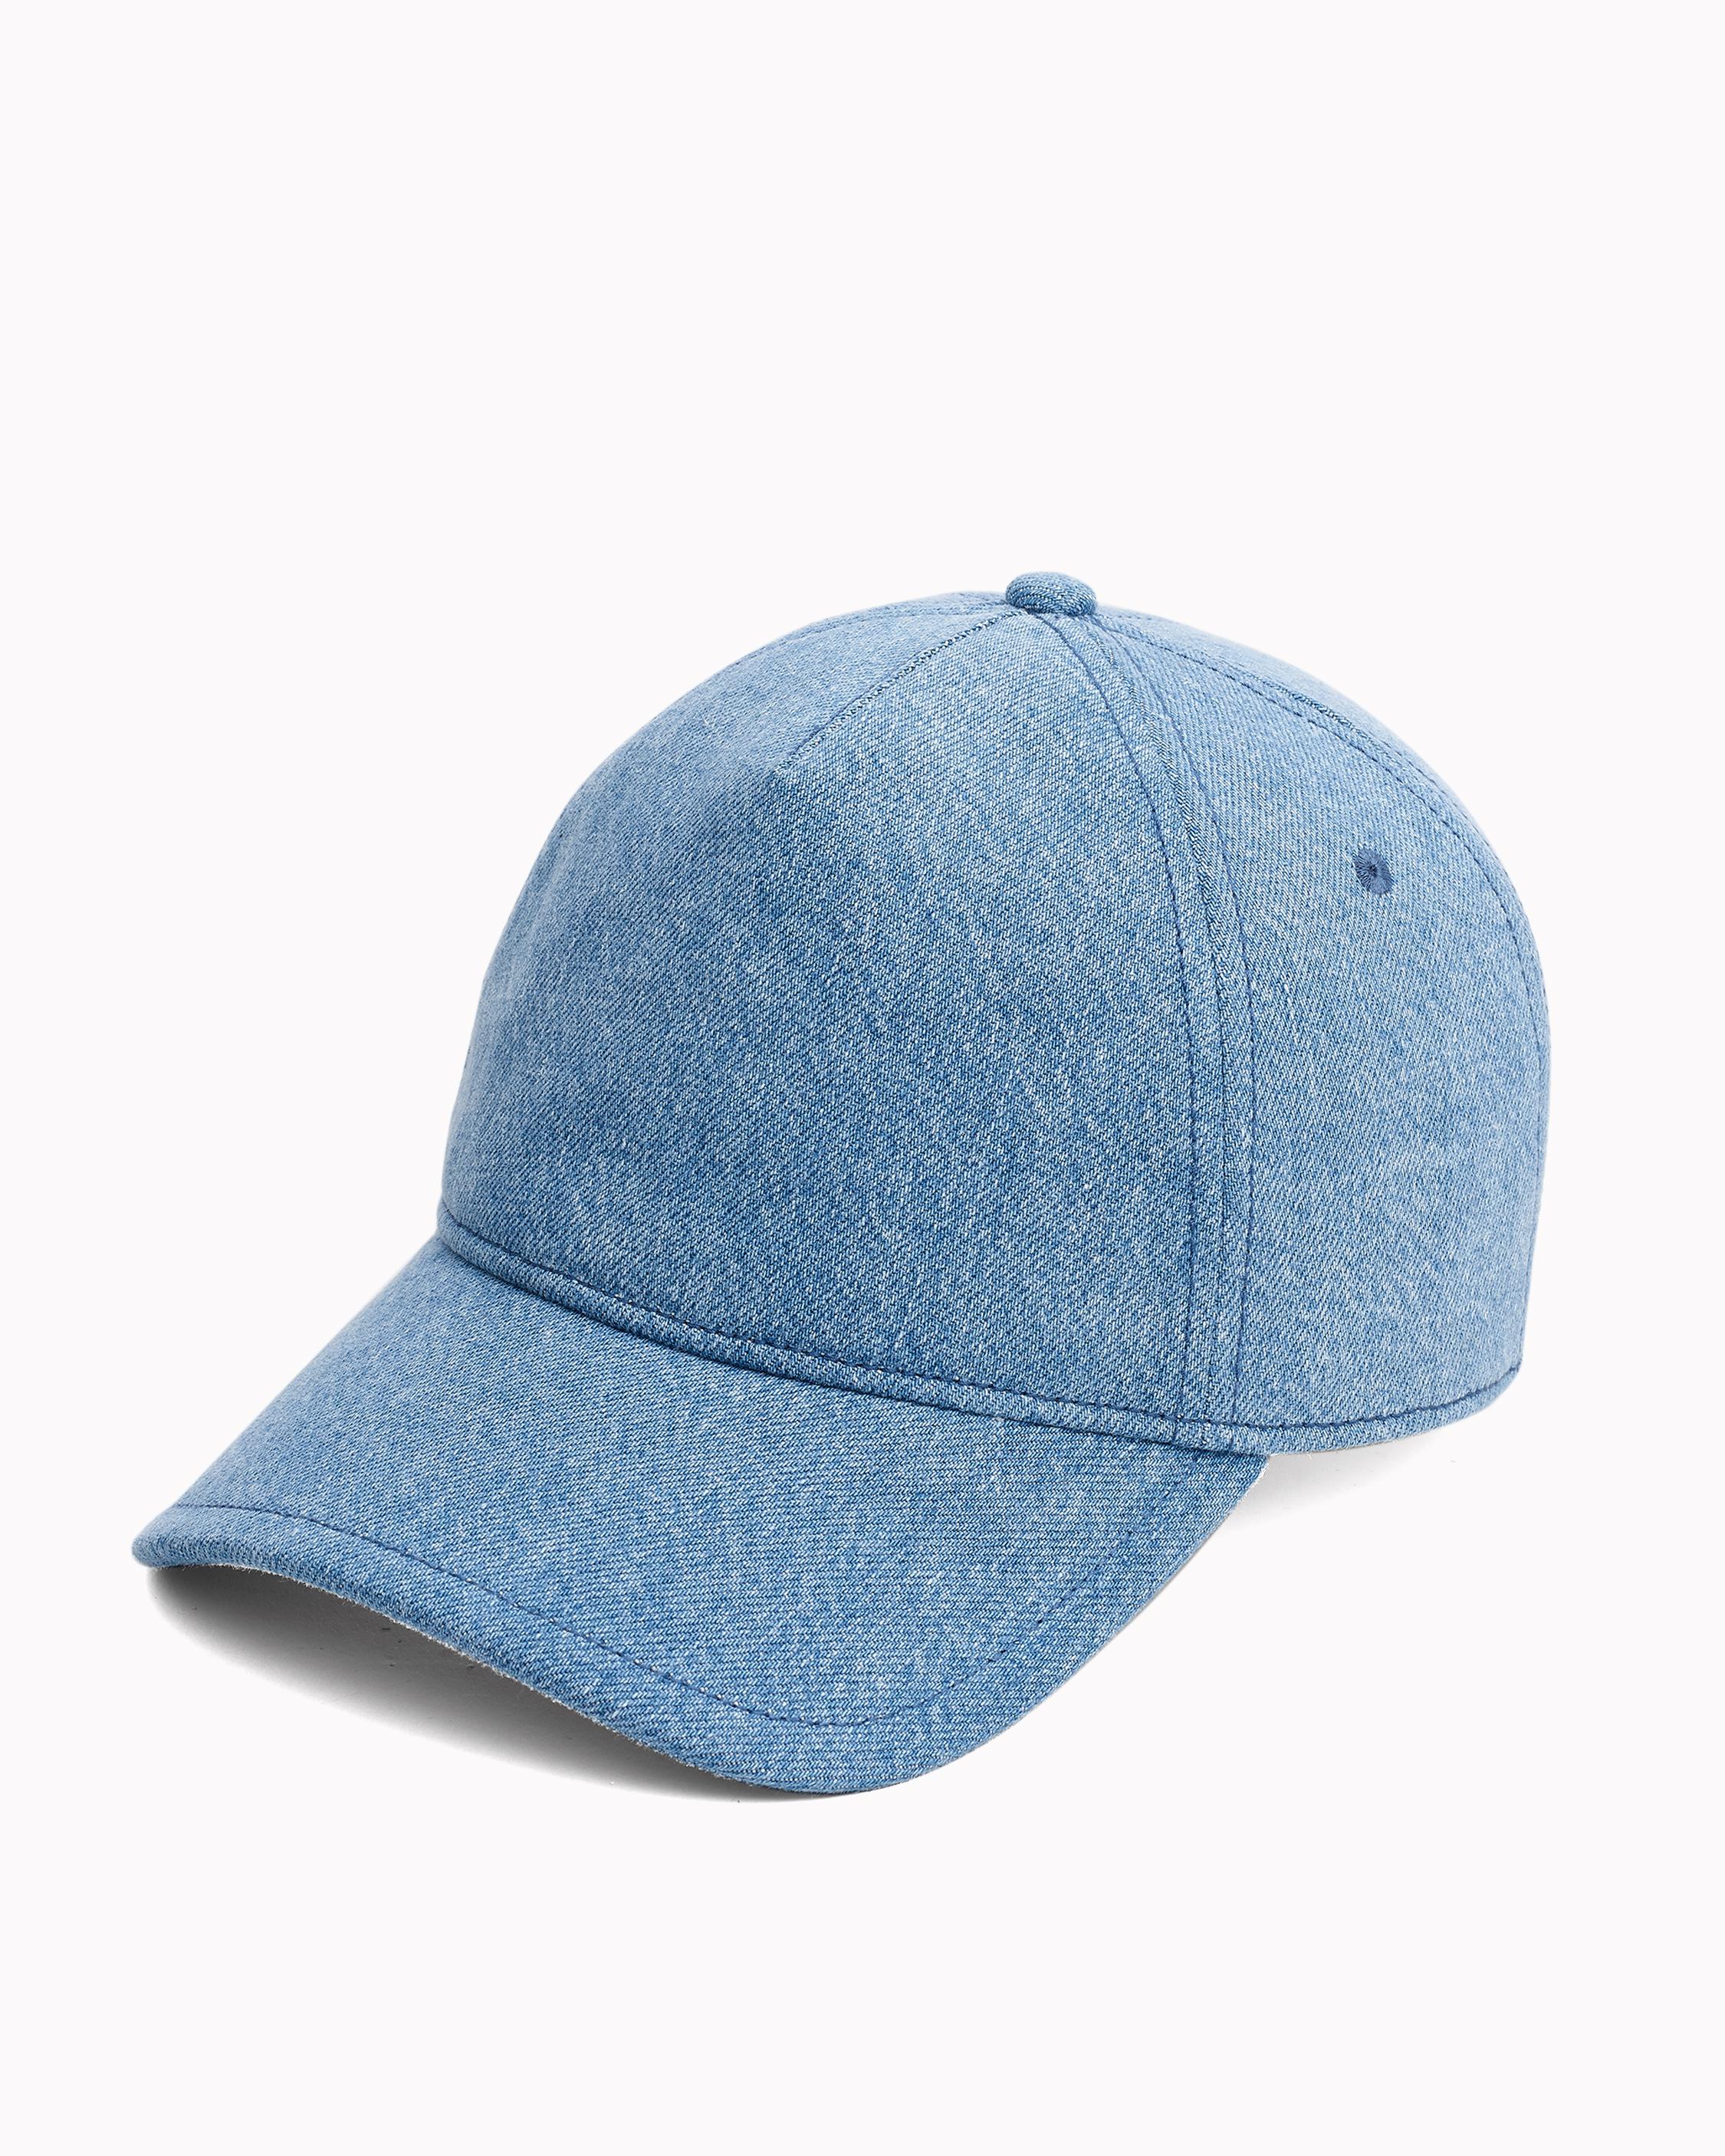 rag and bone marilyn baseball cap